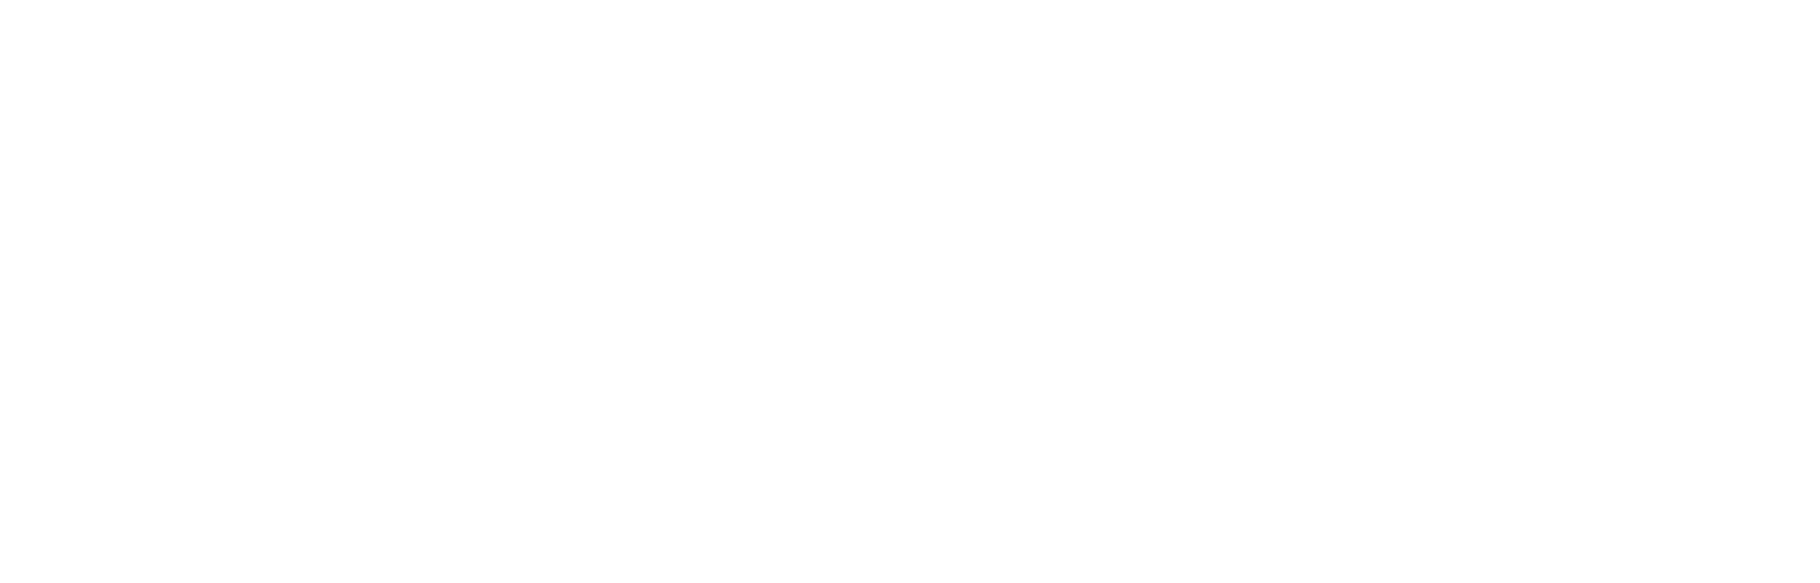 Mailswap